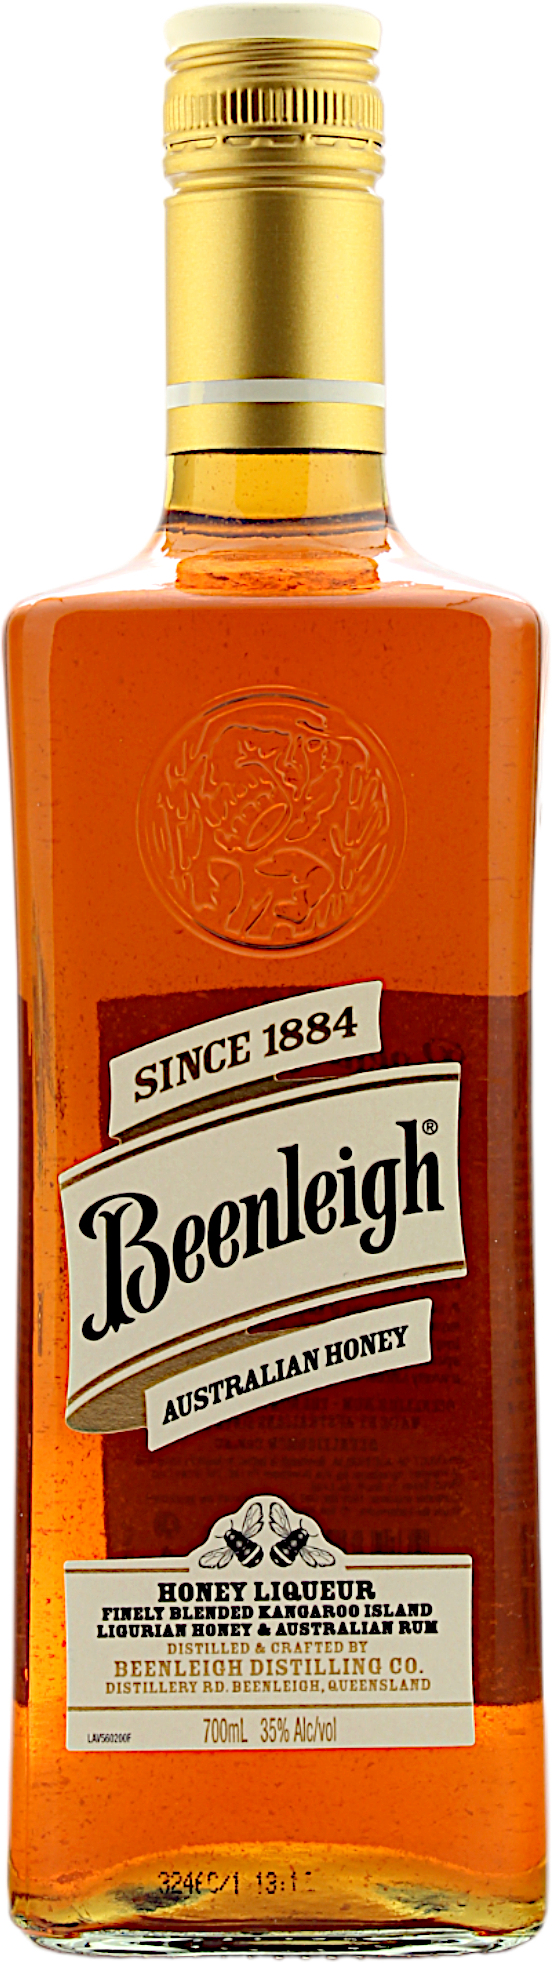 Beenleigh Honey Liqueur Rum 35.0% 0,7l